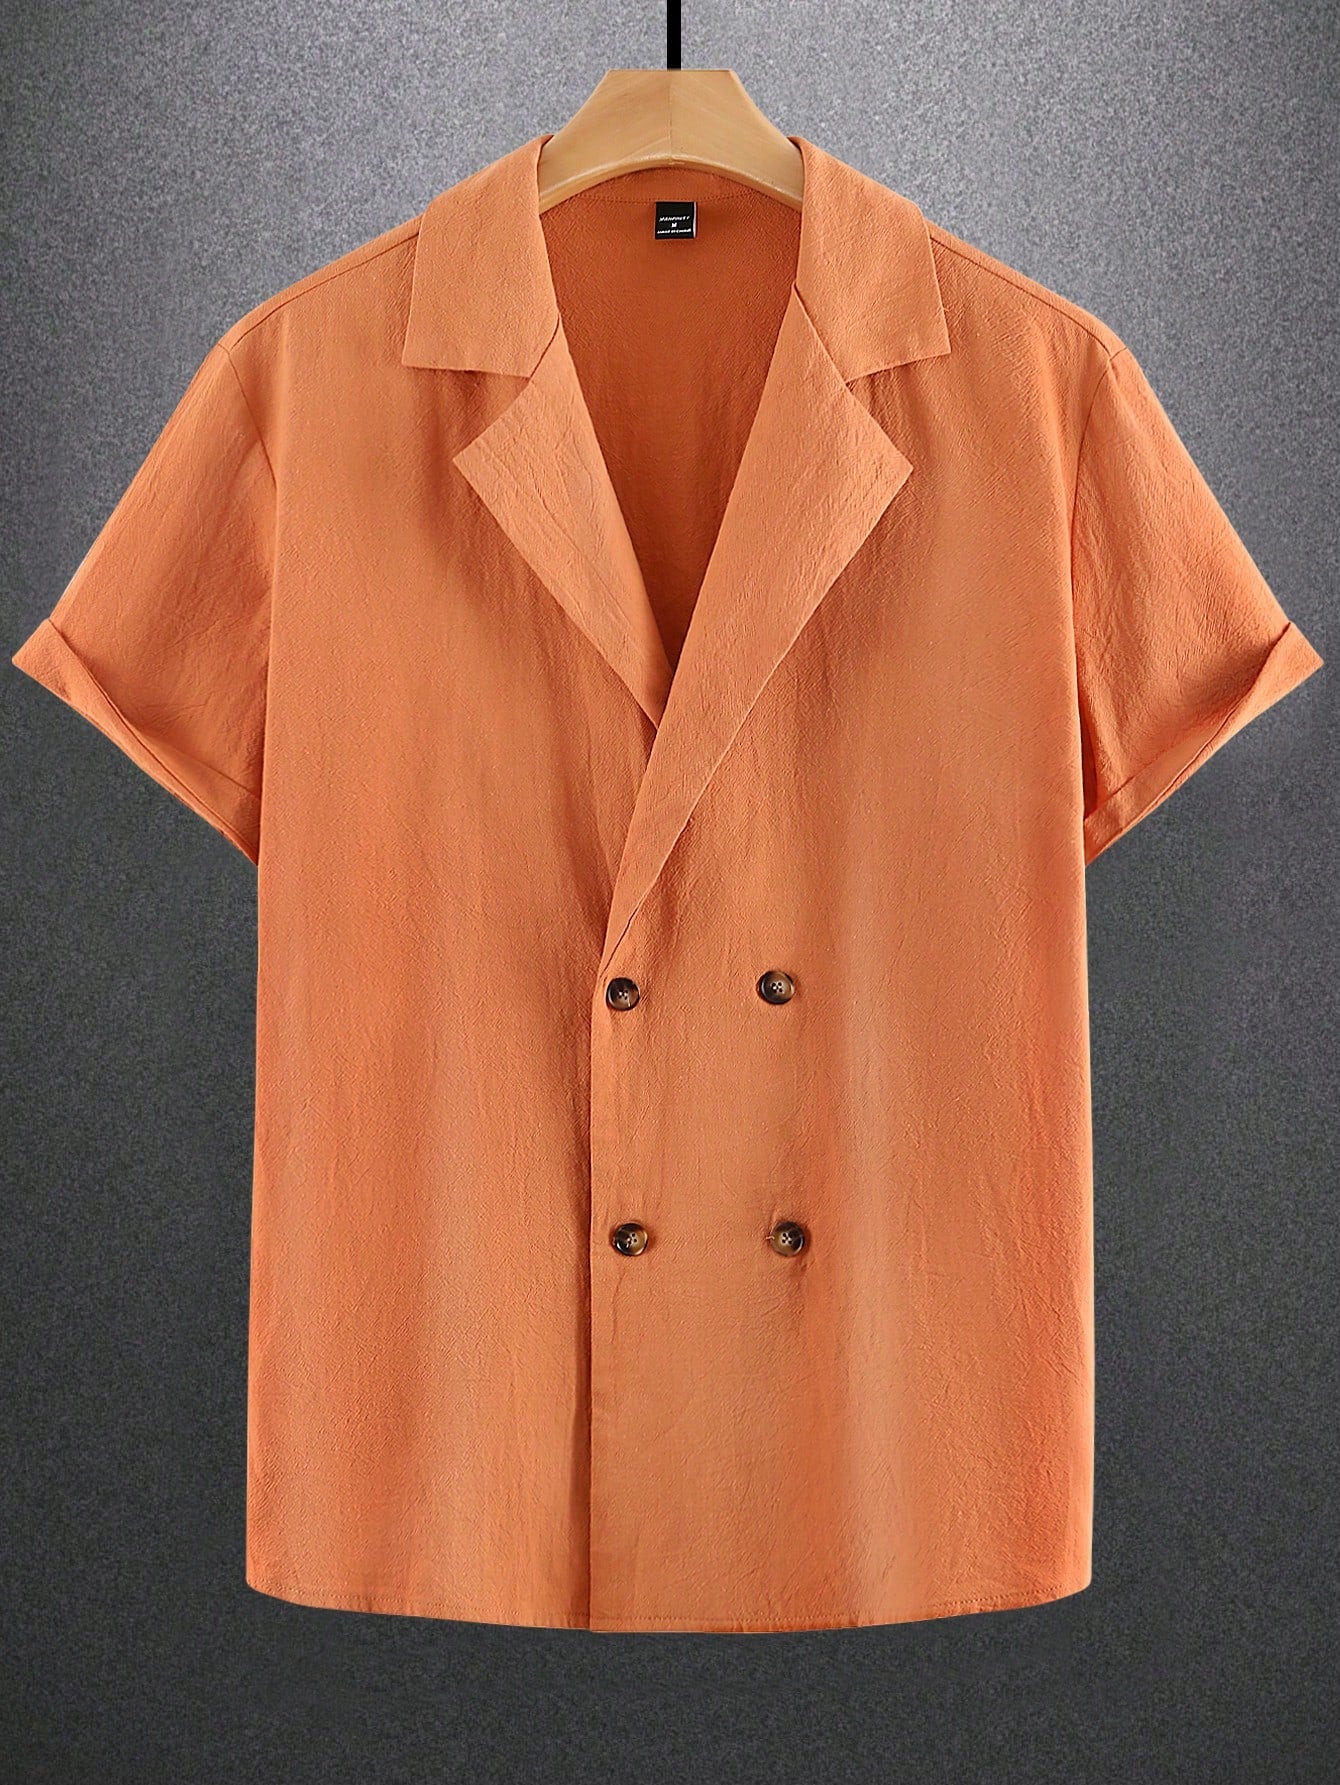 Men's Double Breasted Short Sleeve Orange Shirt